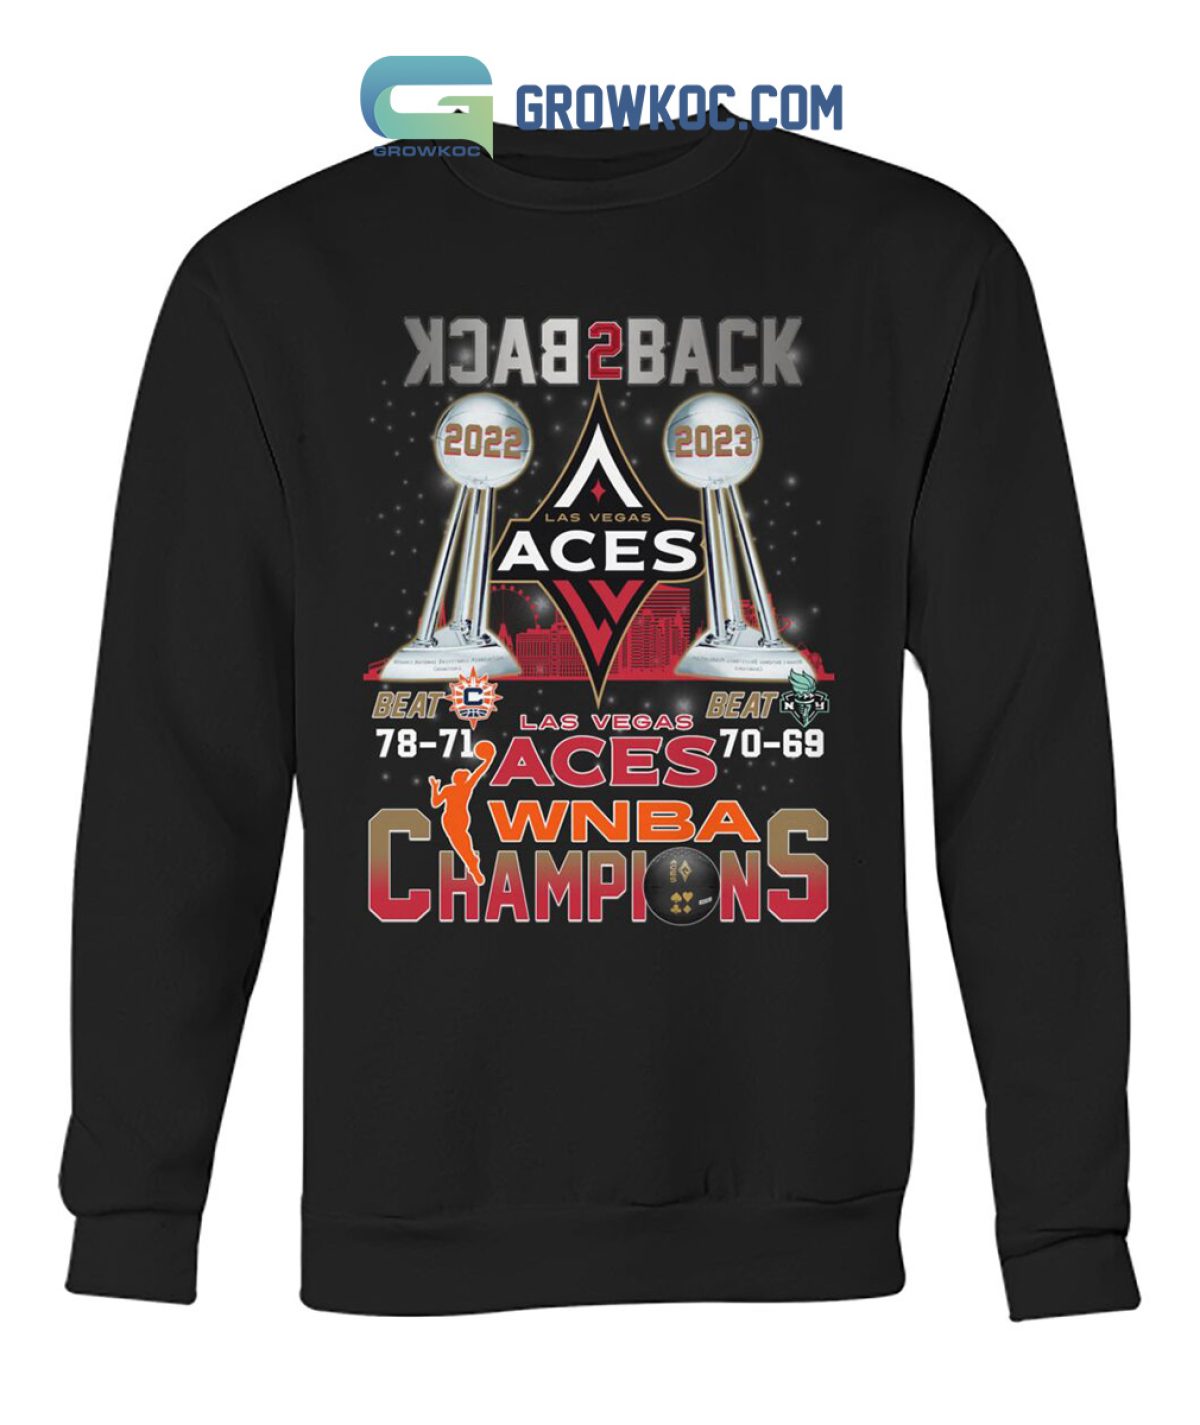 WNBA Champ 2023 Las Vegas Aces Back 2 Back Shirt - teejeep